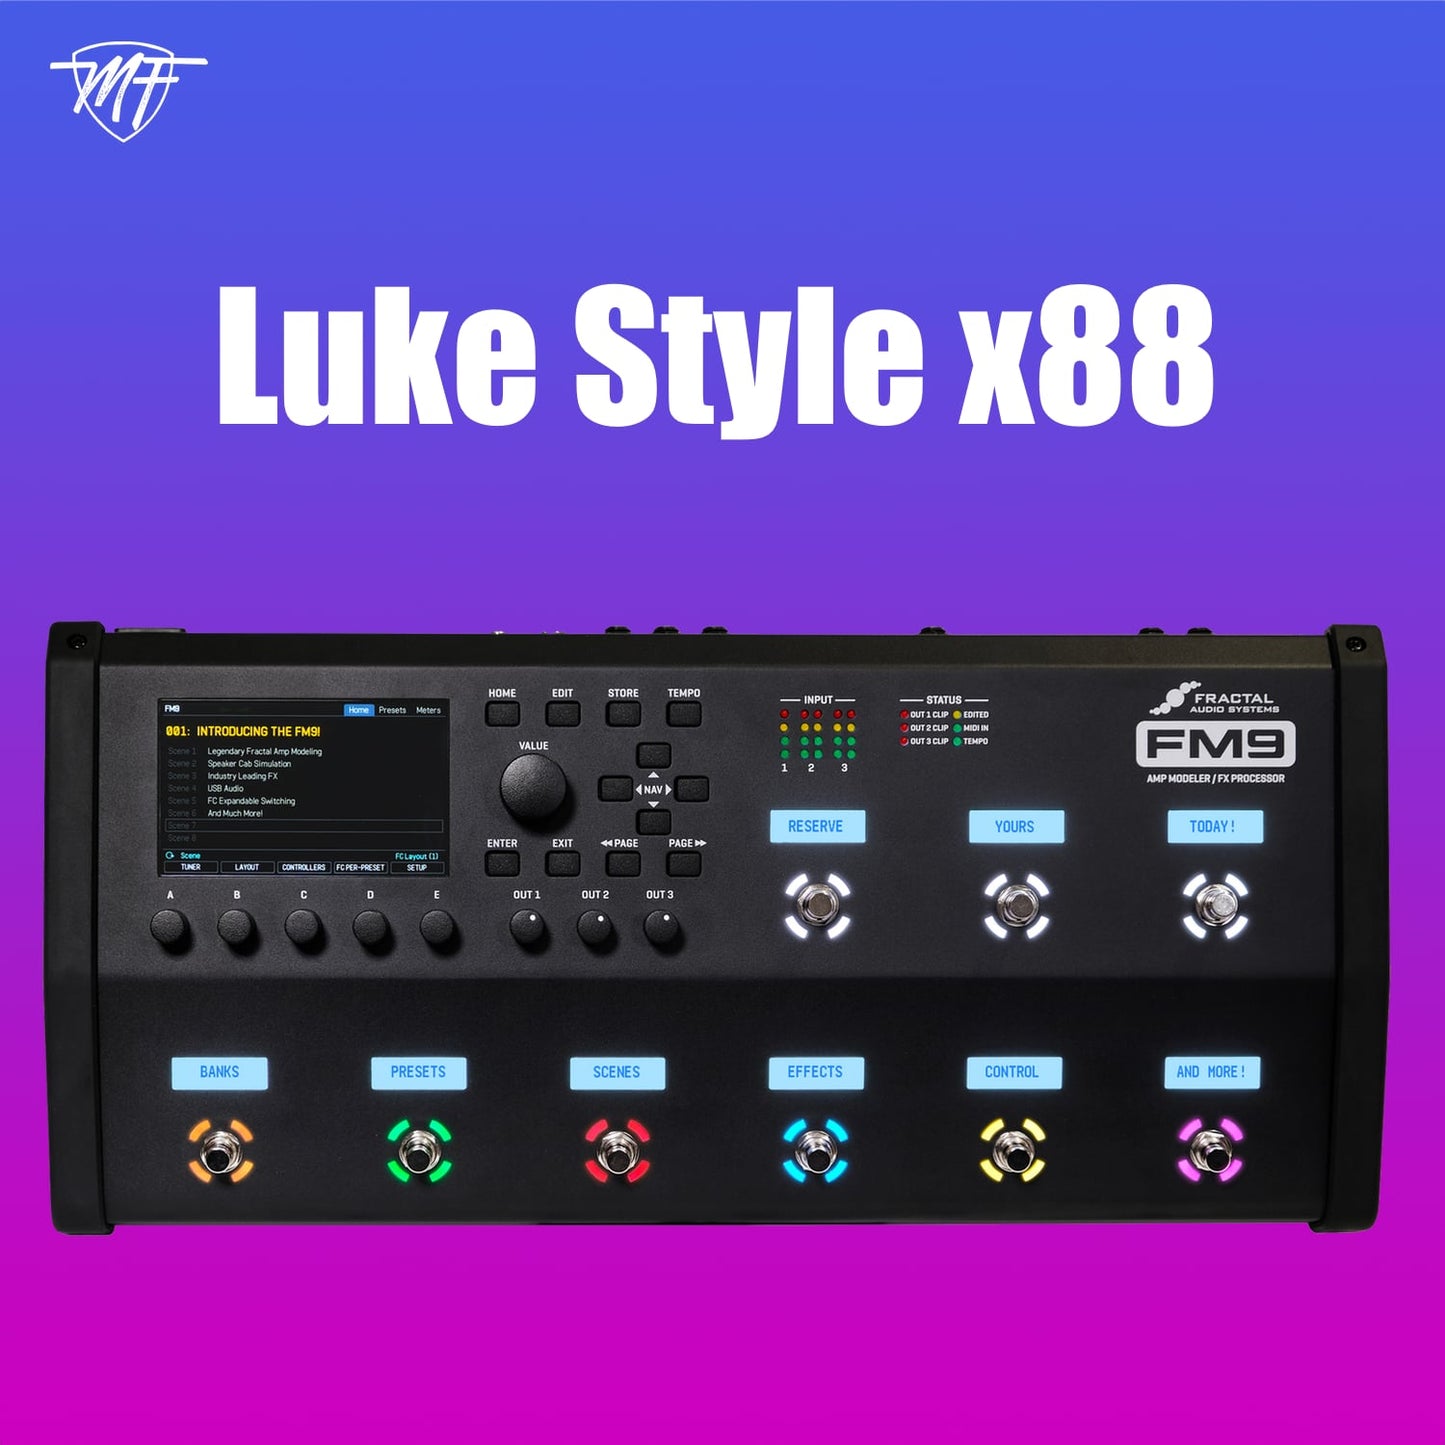 Luke Style x88 FM9